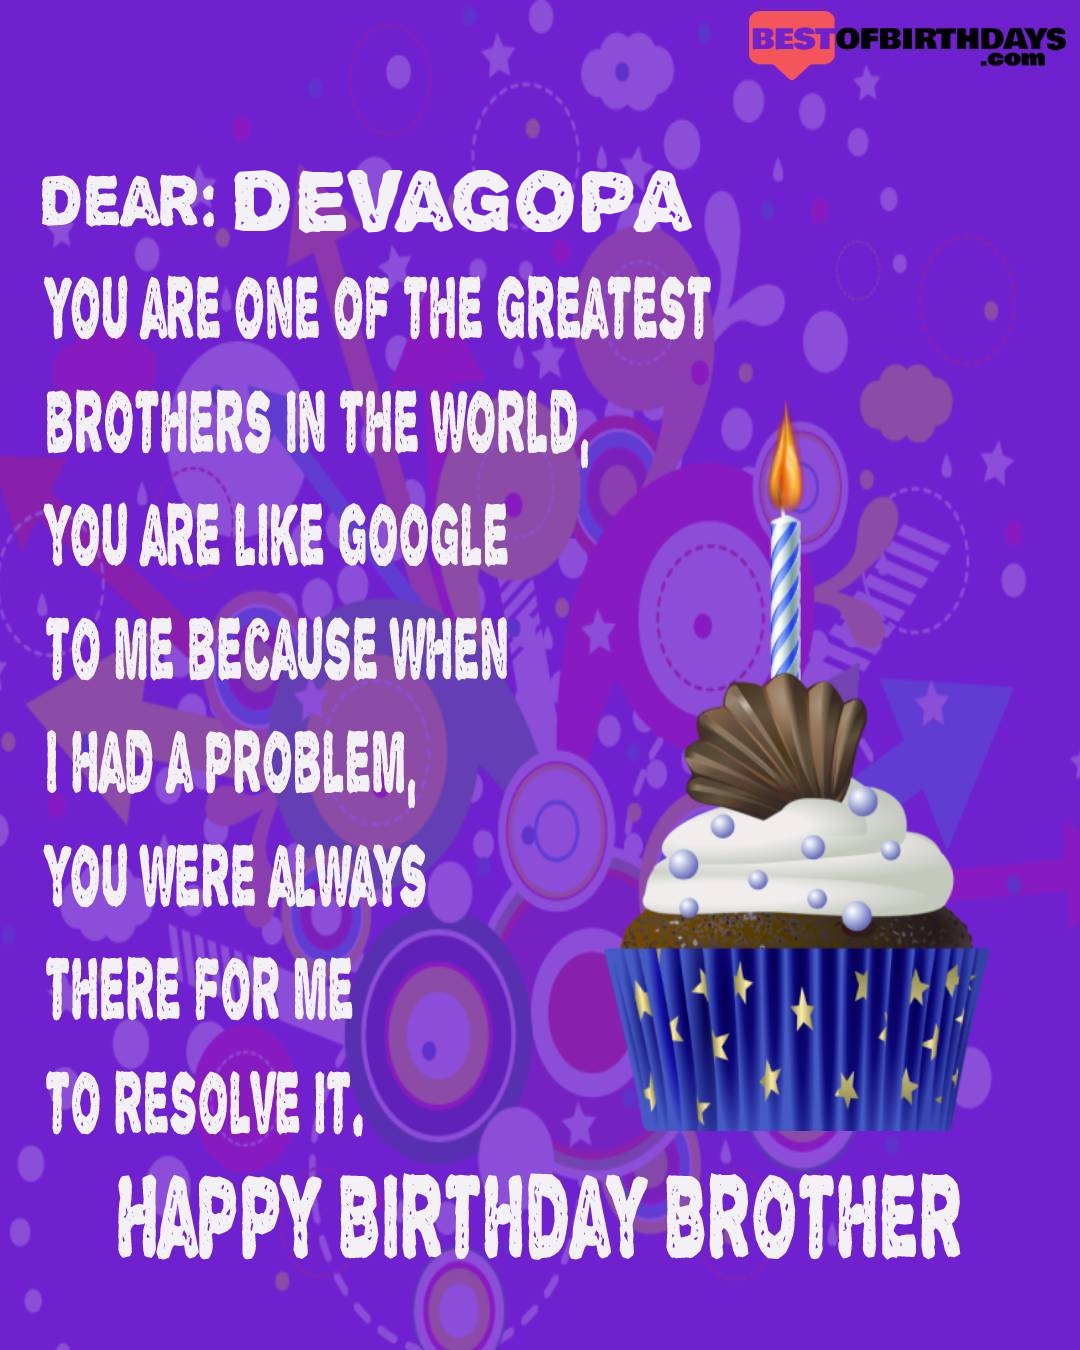 Happy birthday devagopa bhai brother bro